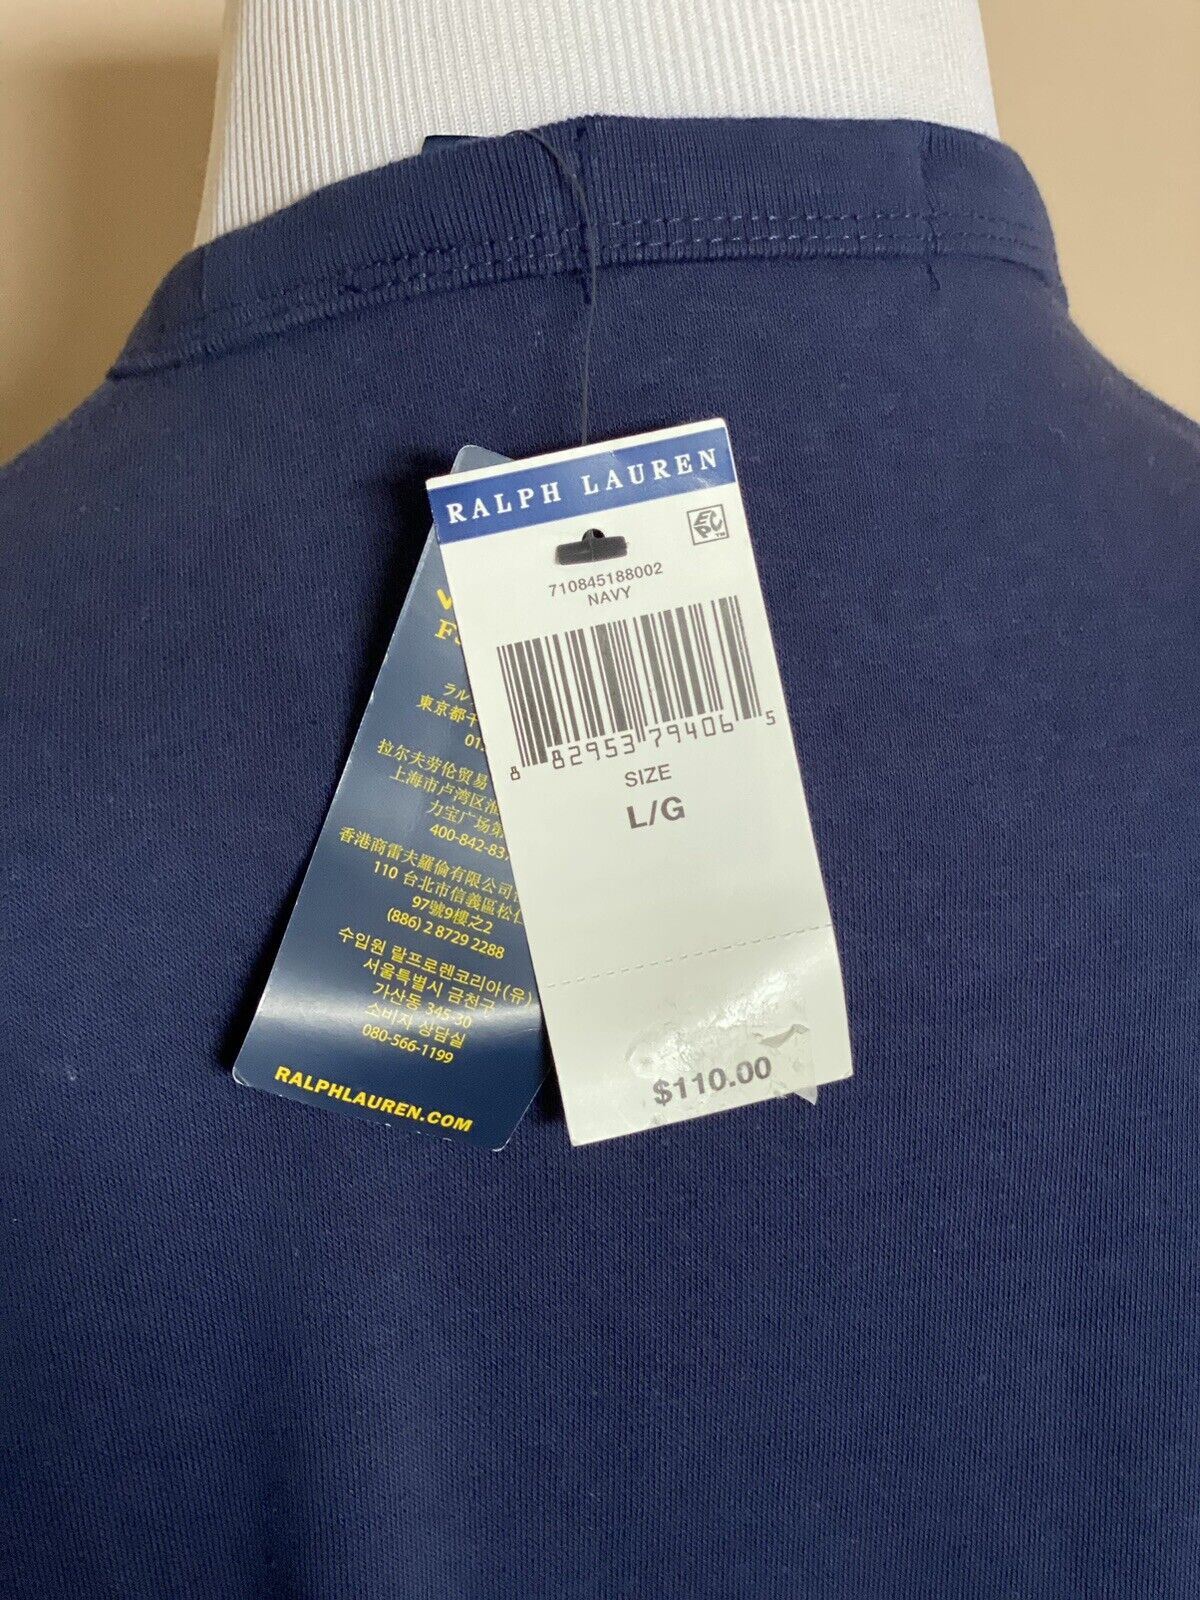 Neu mit Etikett: 110 $ Polo Ralph Lauren Polo-Logo-Fleece-Sweatshirt Marineblau L/G 